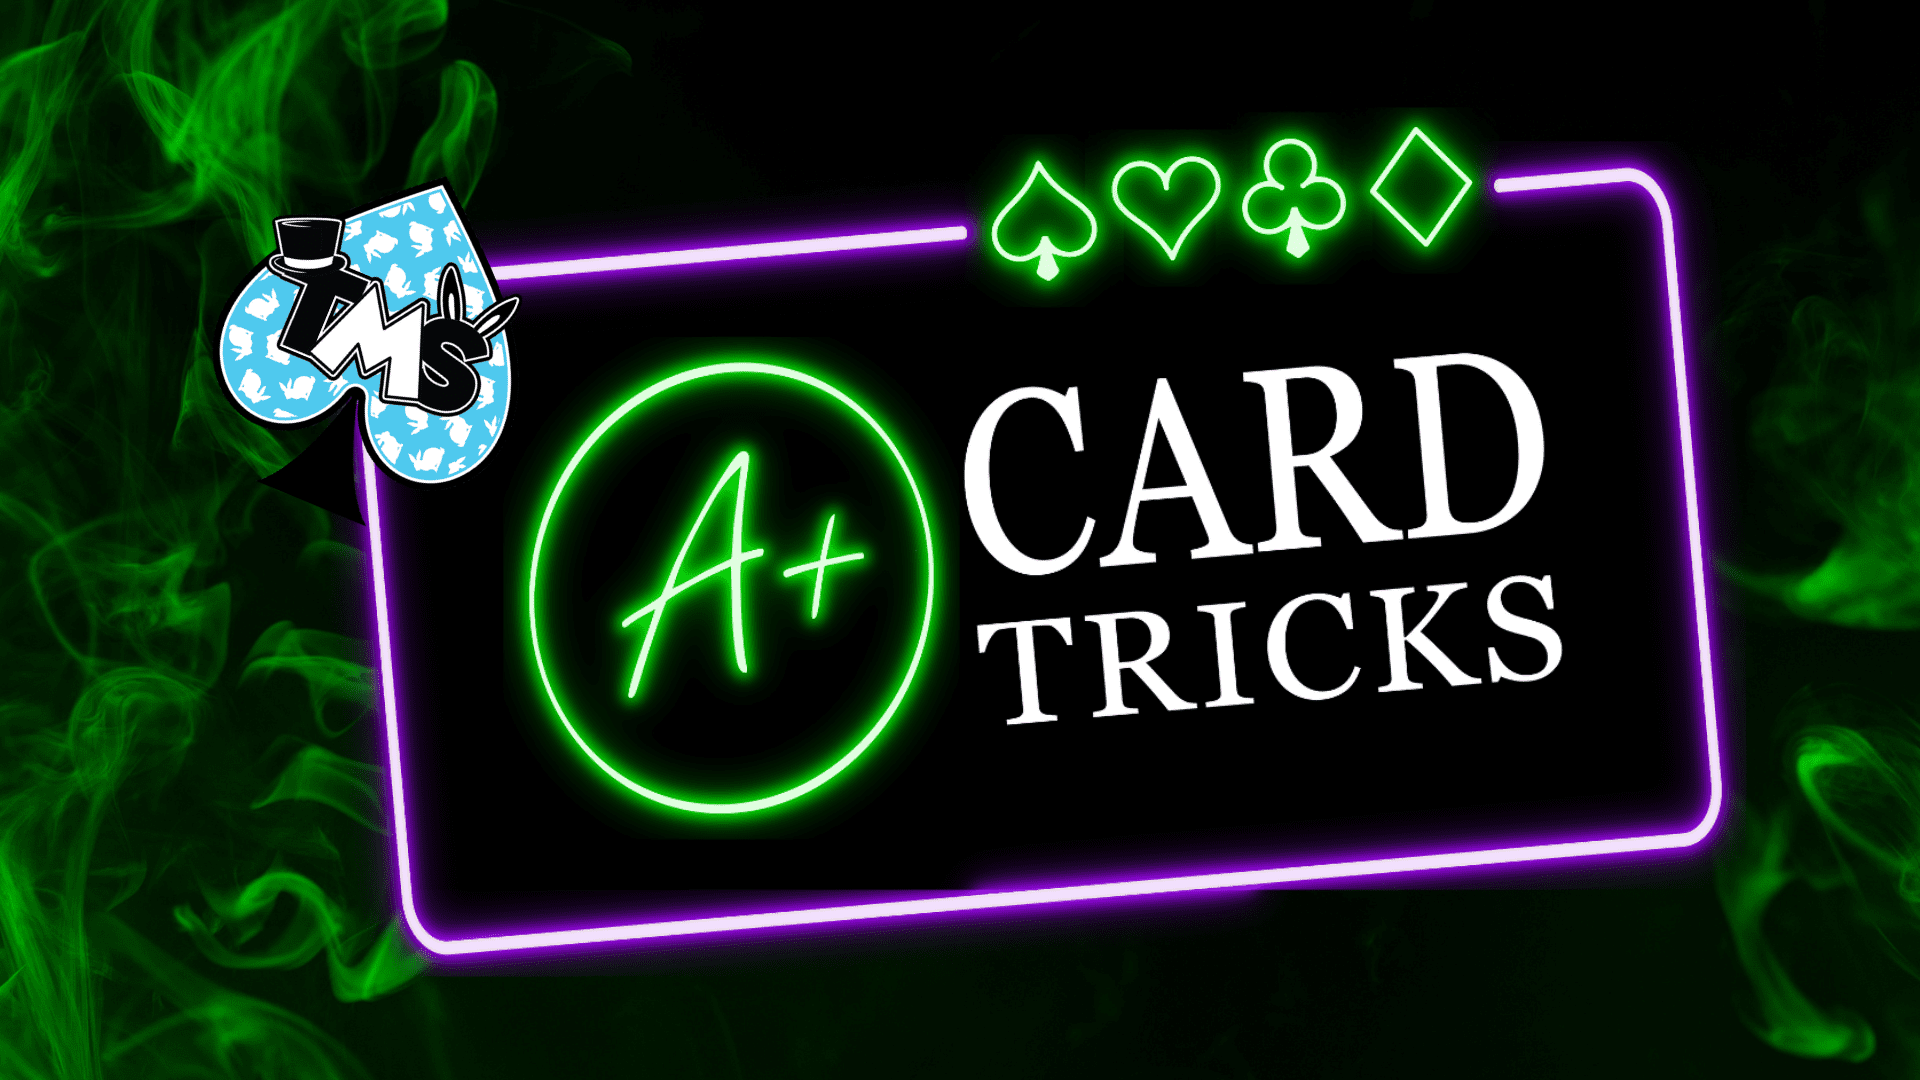 The Magician School - A+ Card Tricks